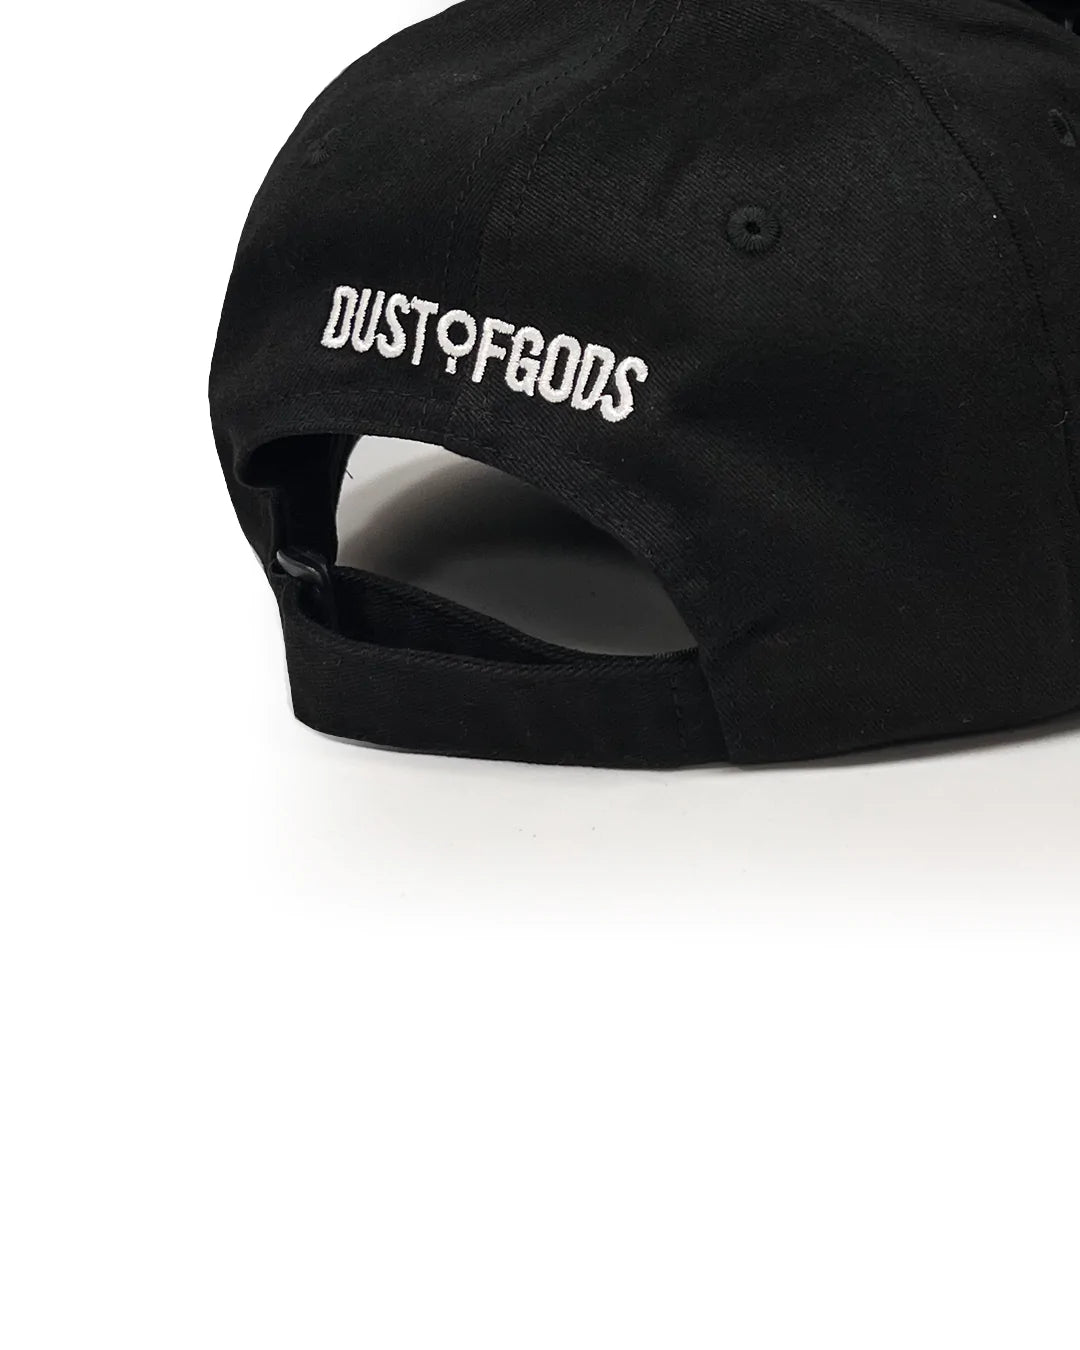 Dust Dealer Hat